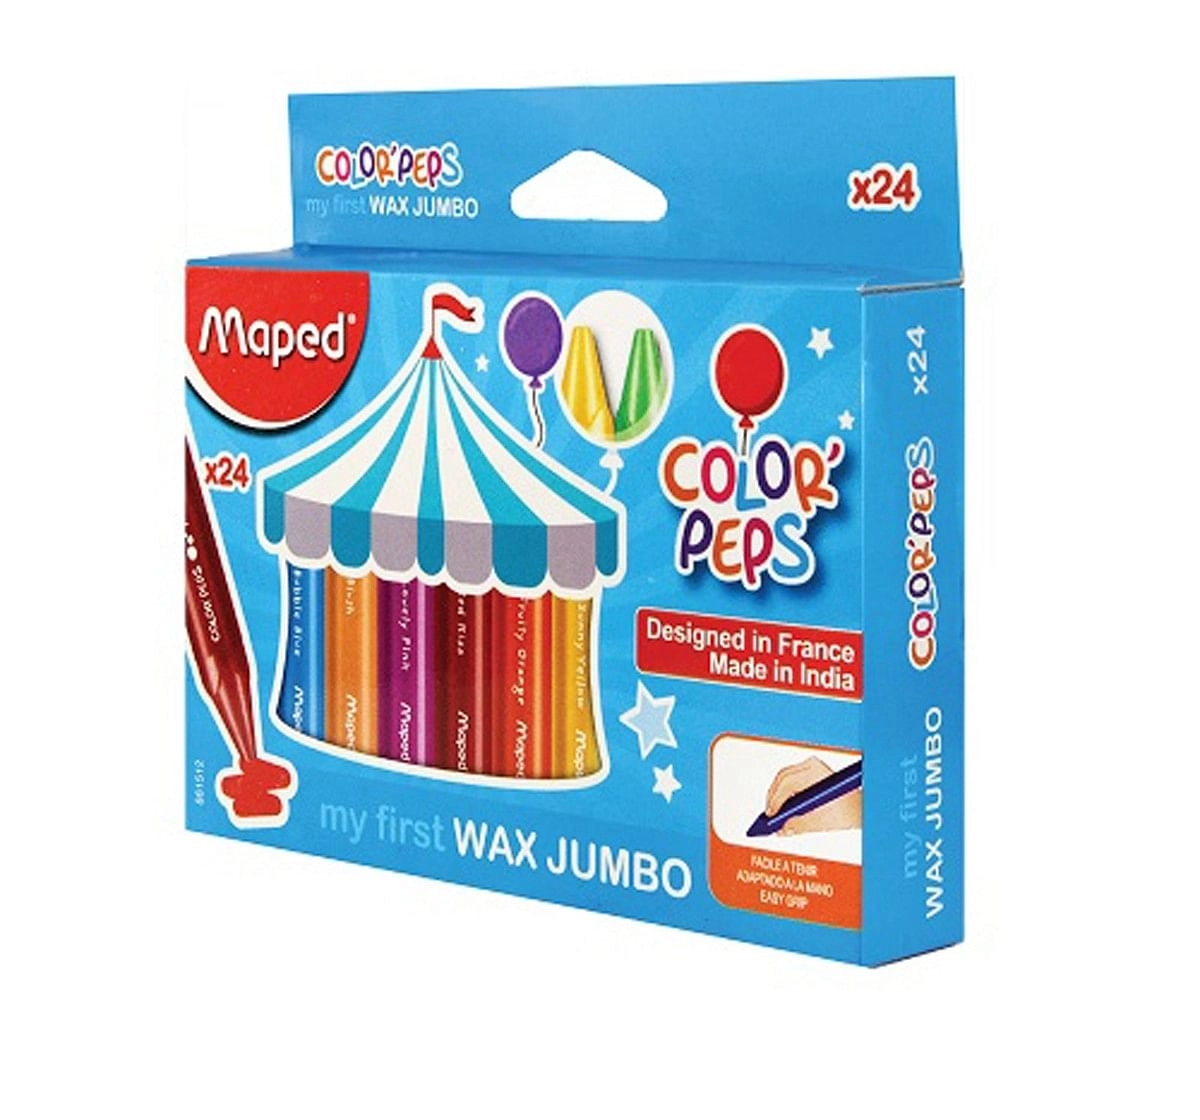 Maped Color'Peps Wax Jumbo Crayons 24 Shades Multicolour 7Y+